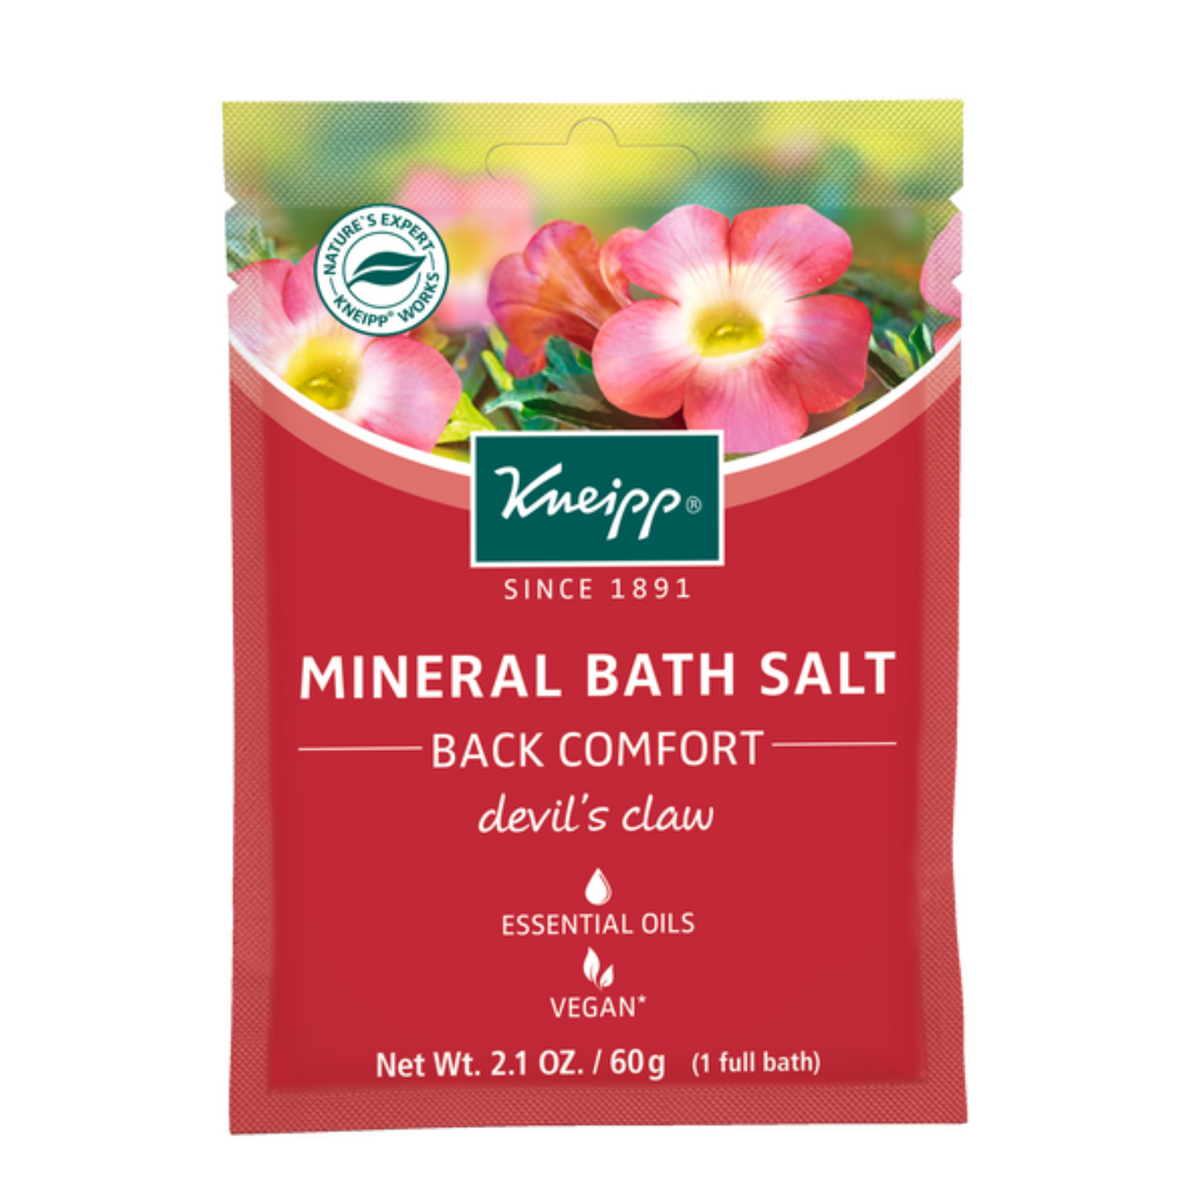 Primary Image of Kneipp Devil's Claw Back Comfort Mineral Bath Salt (2.1 oz)